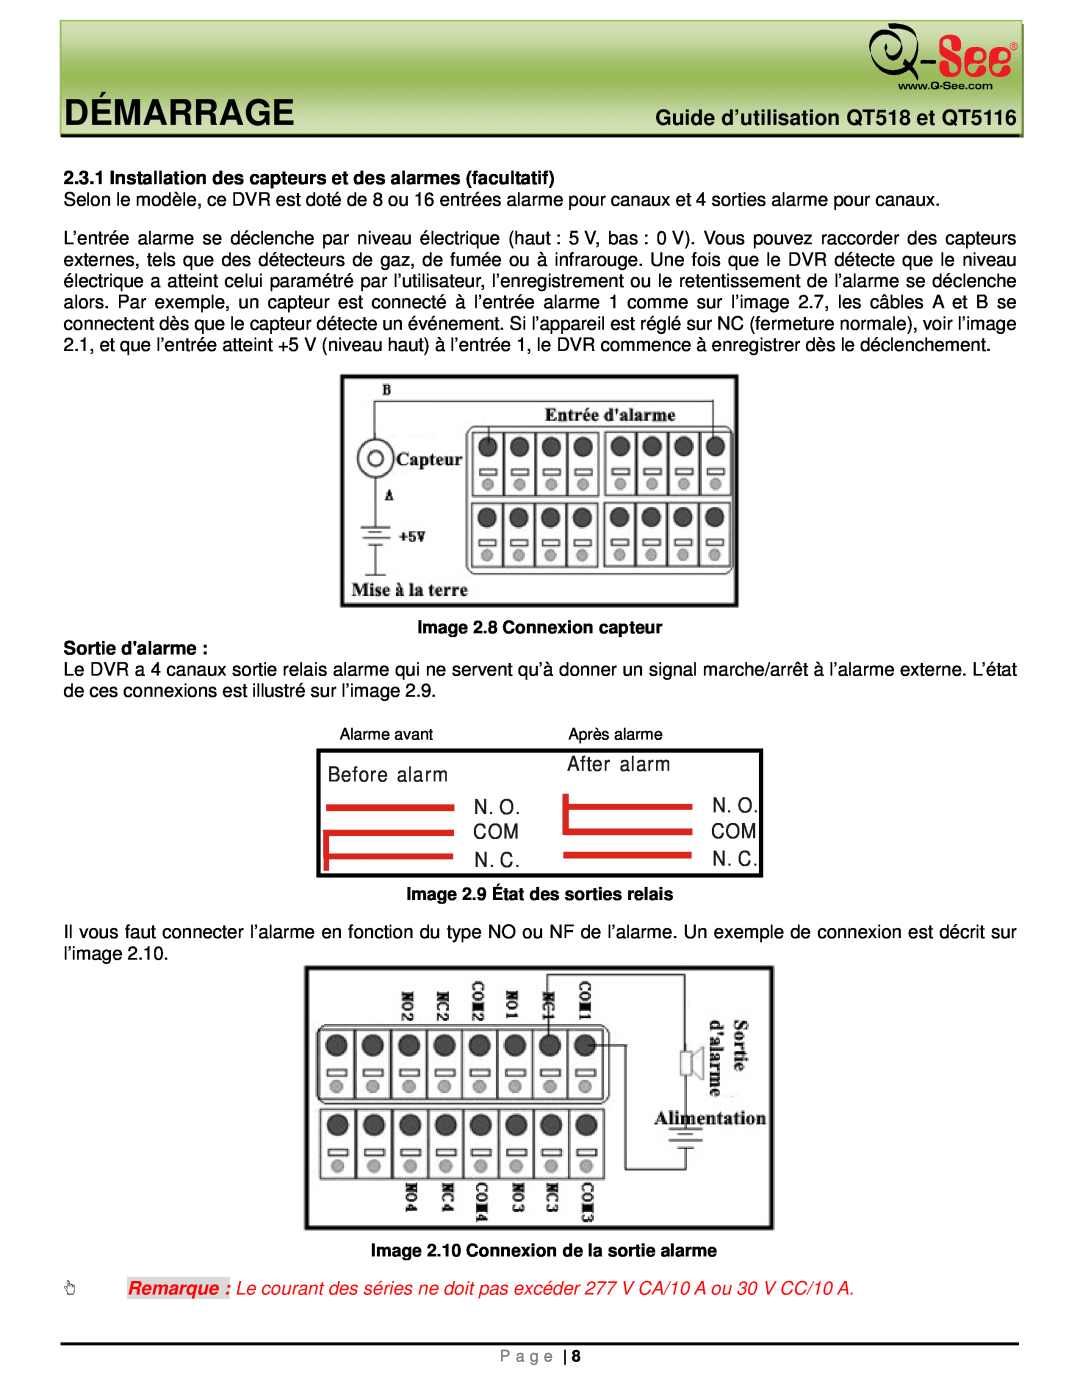 Q-See manual N. C, Démarrage, Guide d’utilisation QT518 et QT5116, Before alarm, After alarm 